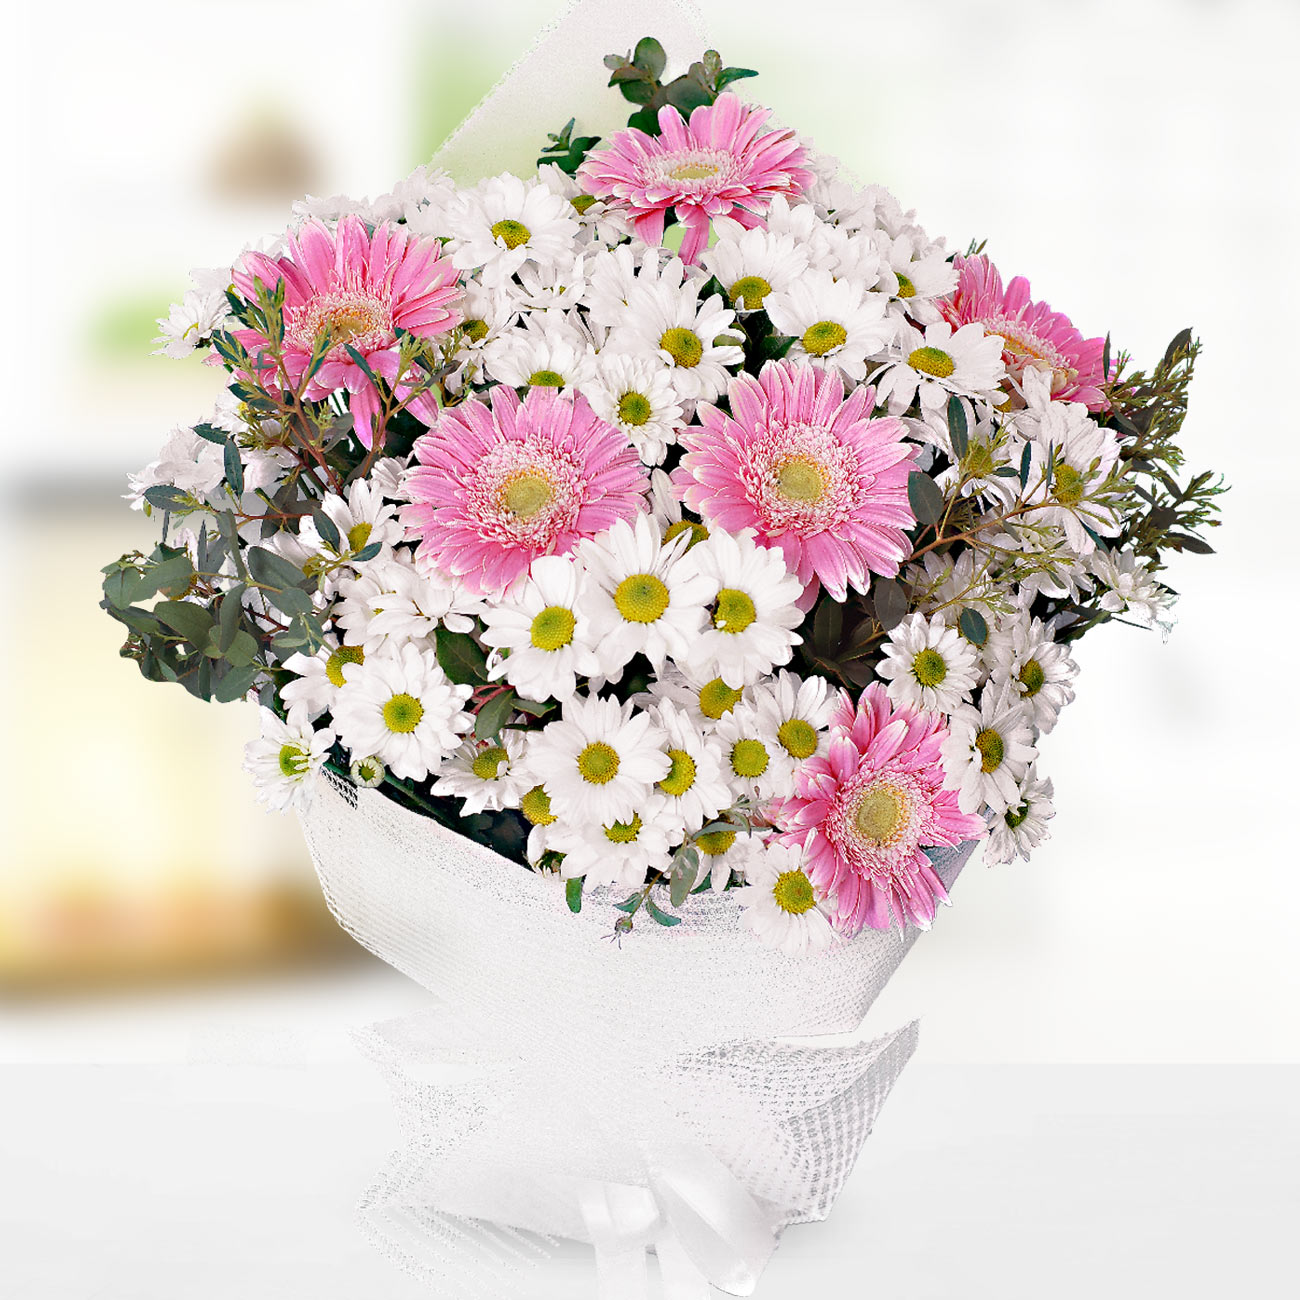 Send flowers Turkey, Daisy and Gerbera Bouquet from 22USD